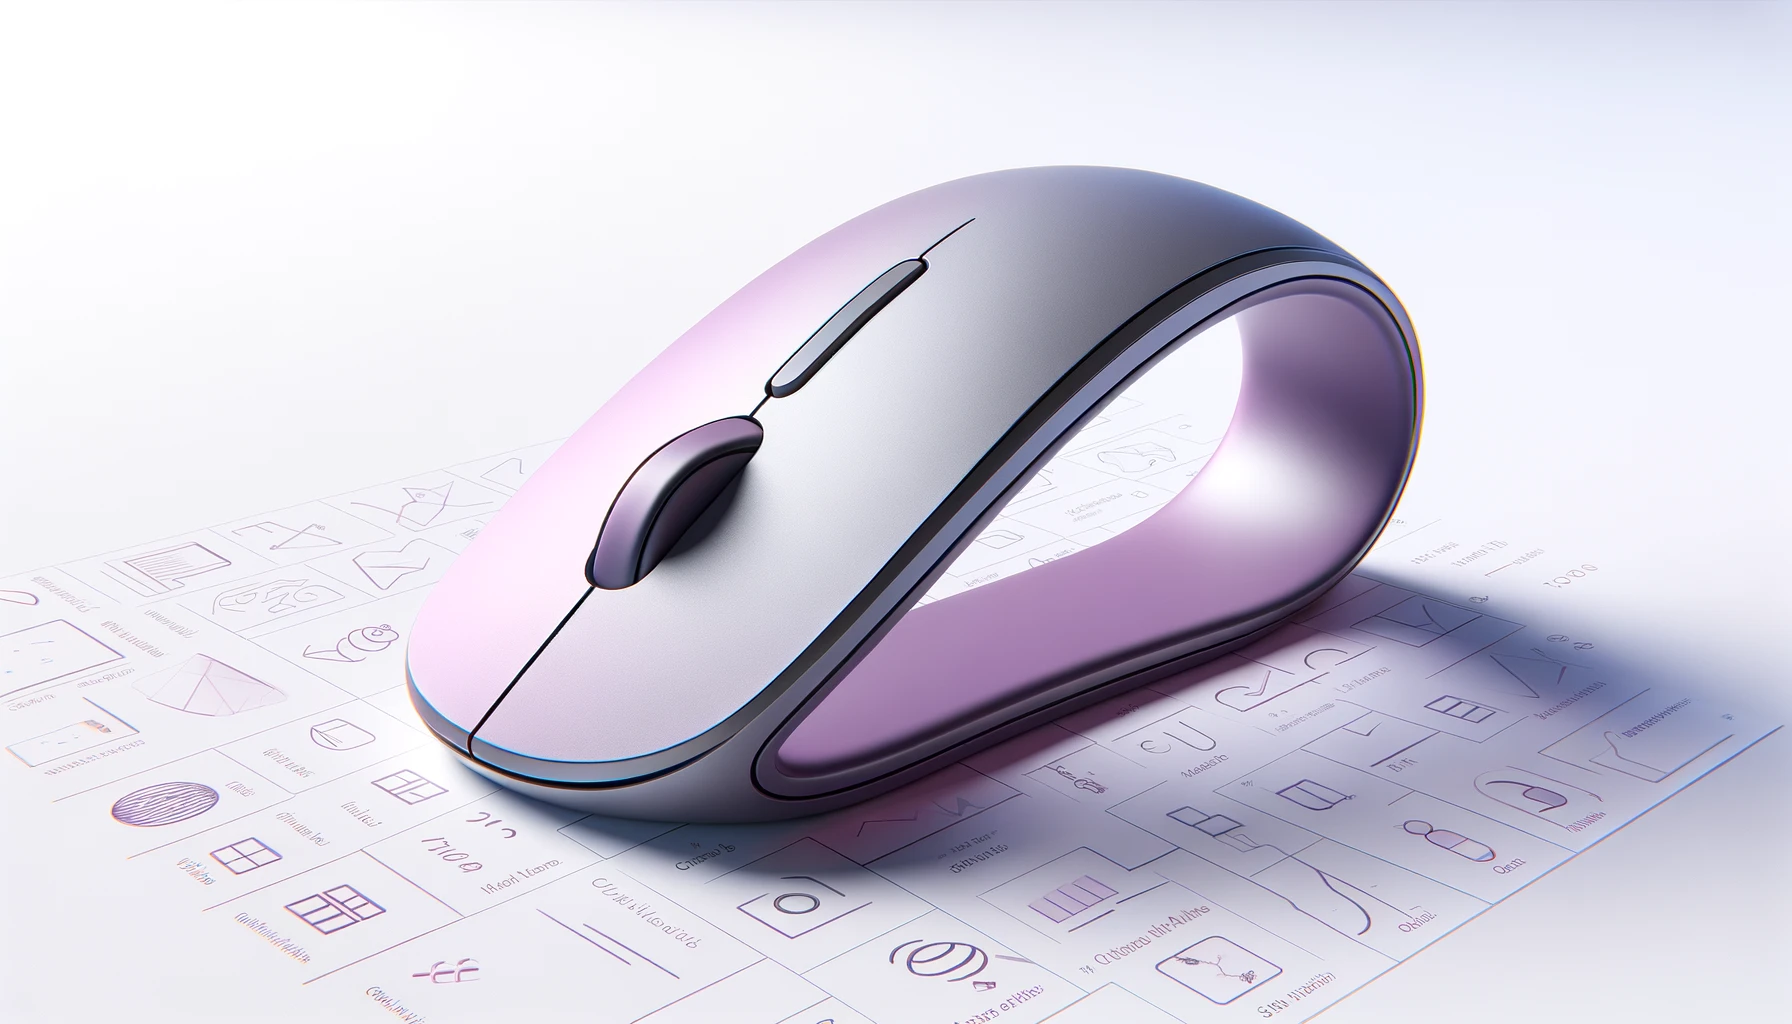 Surfaceユーザー必見！「マイクロソフト アーク マウス ELG-00020」の魅力とは？ - 最先端のワイヤレス薄型マウスを徹底解析